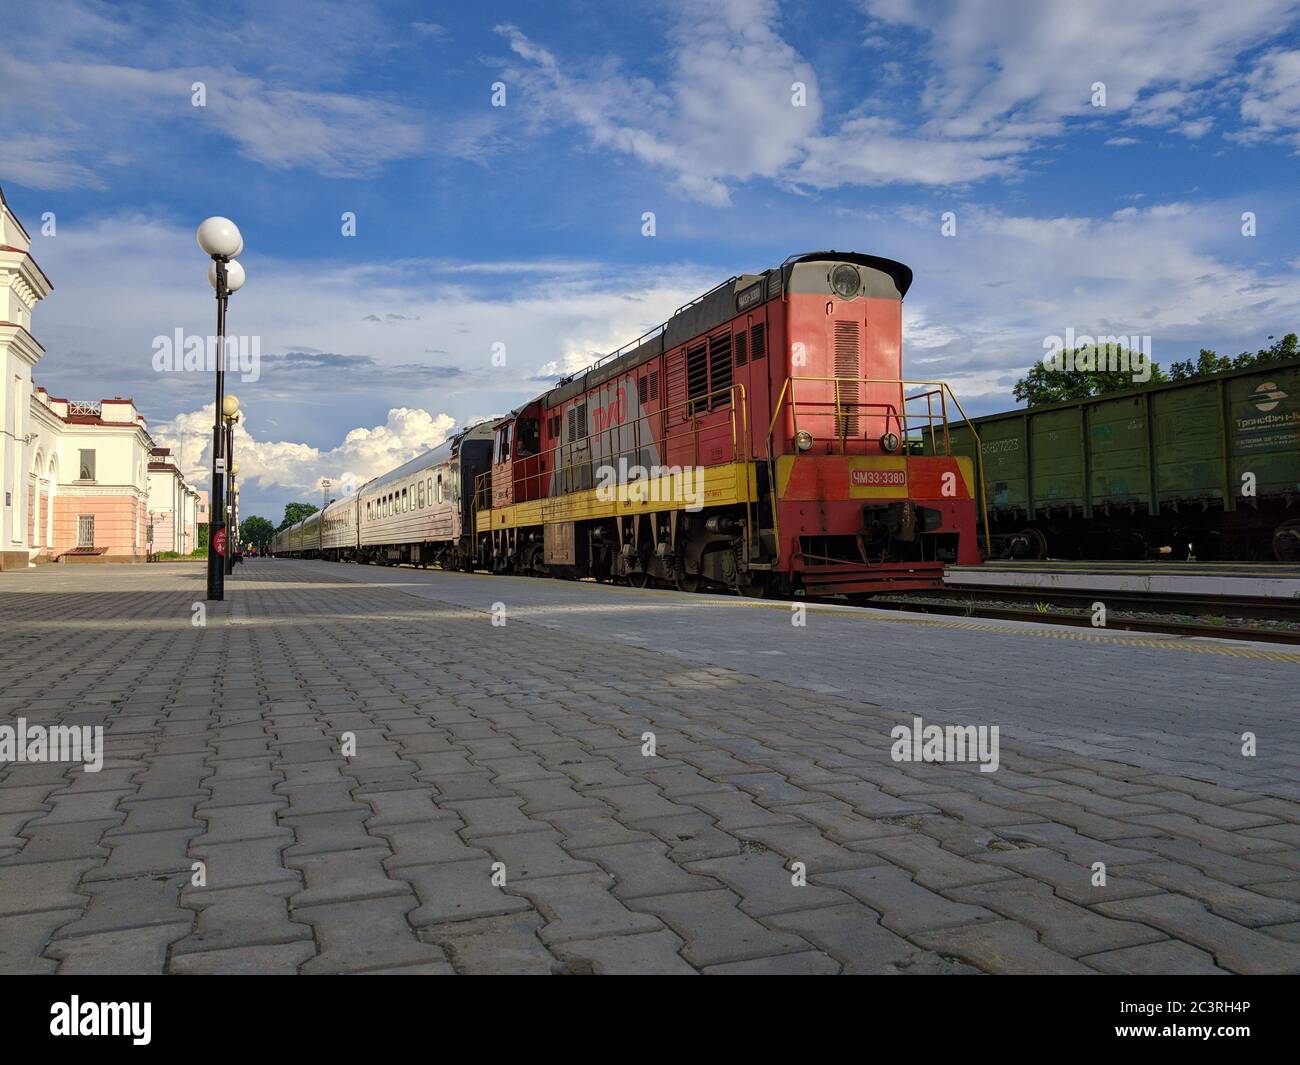 The train on the platform. Russian train. Public transport. Railway.Russia-10.062020 Stock Photo